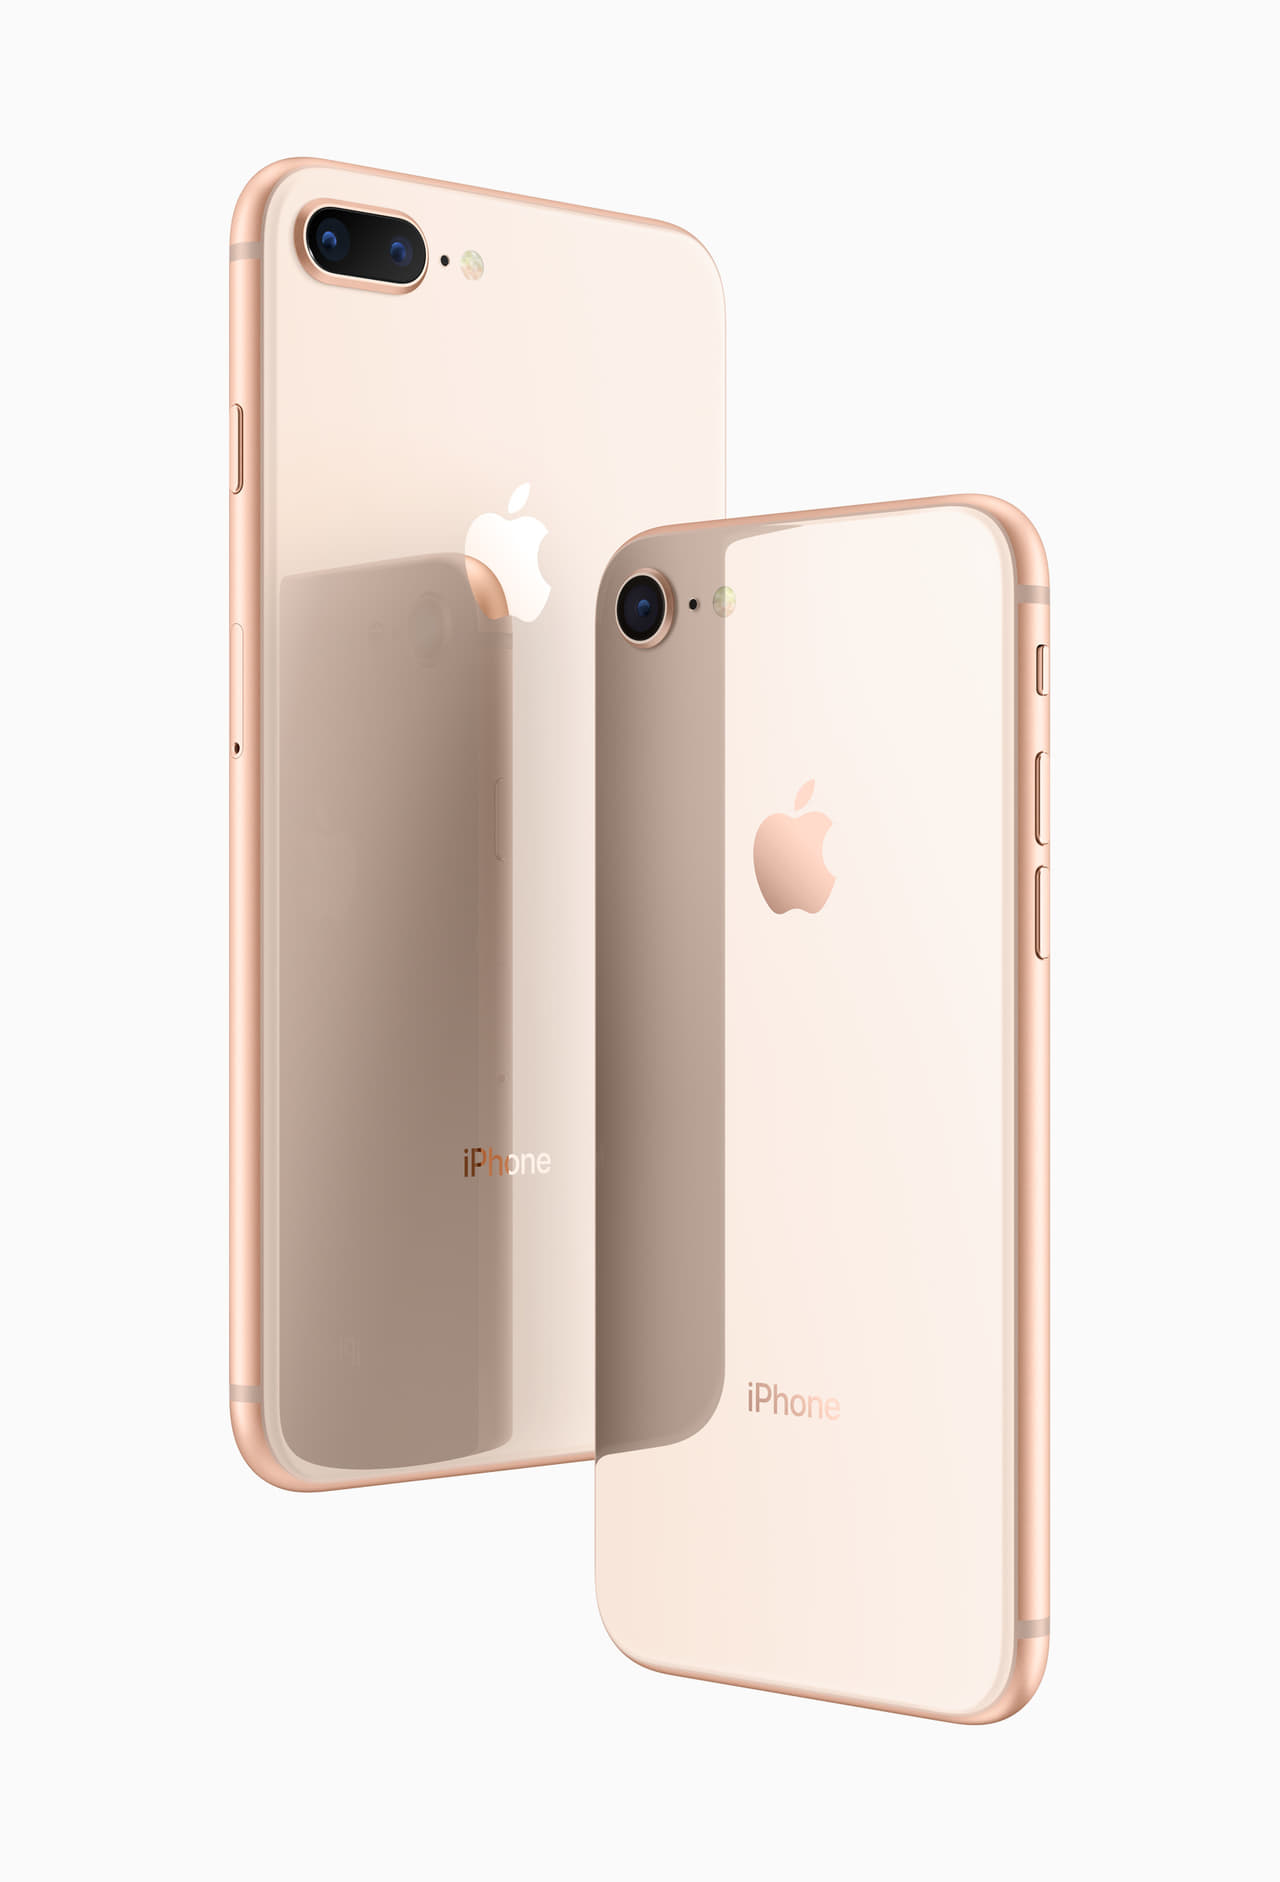 Apple Iphone 8 Plus 64Gb Likenew - Ngọc Thành Mobile